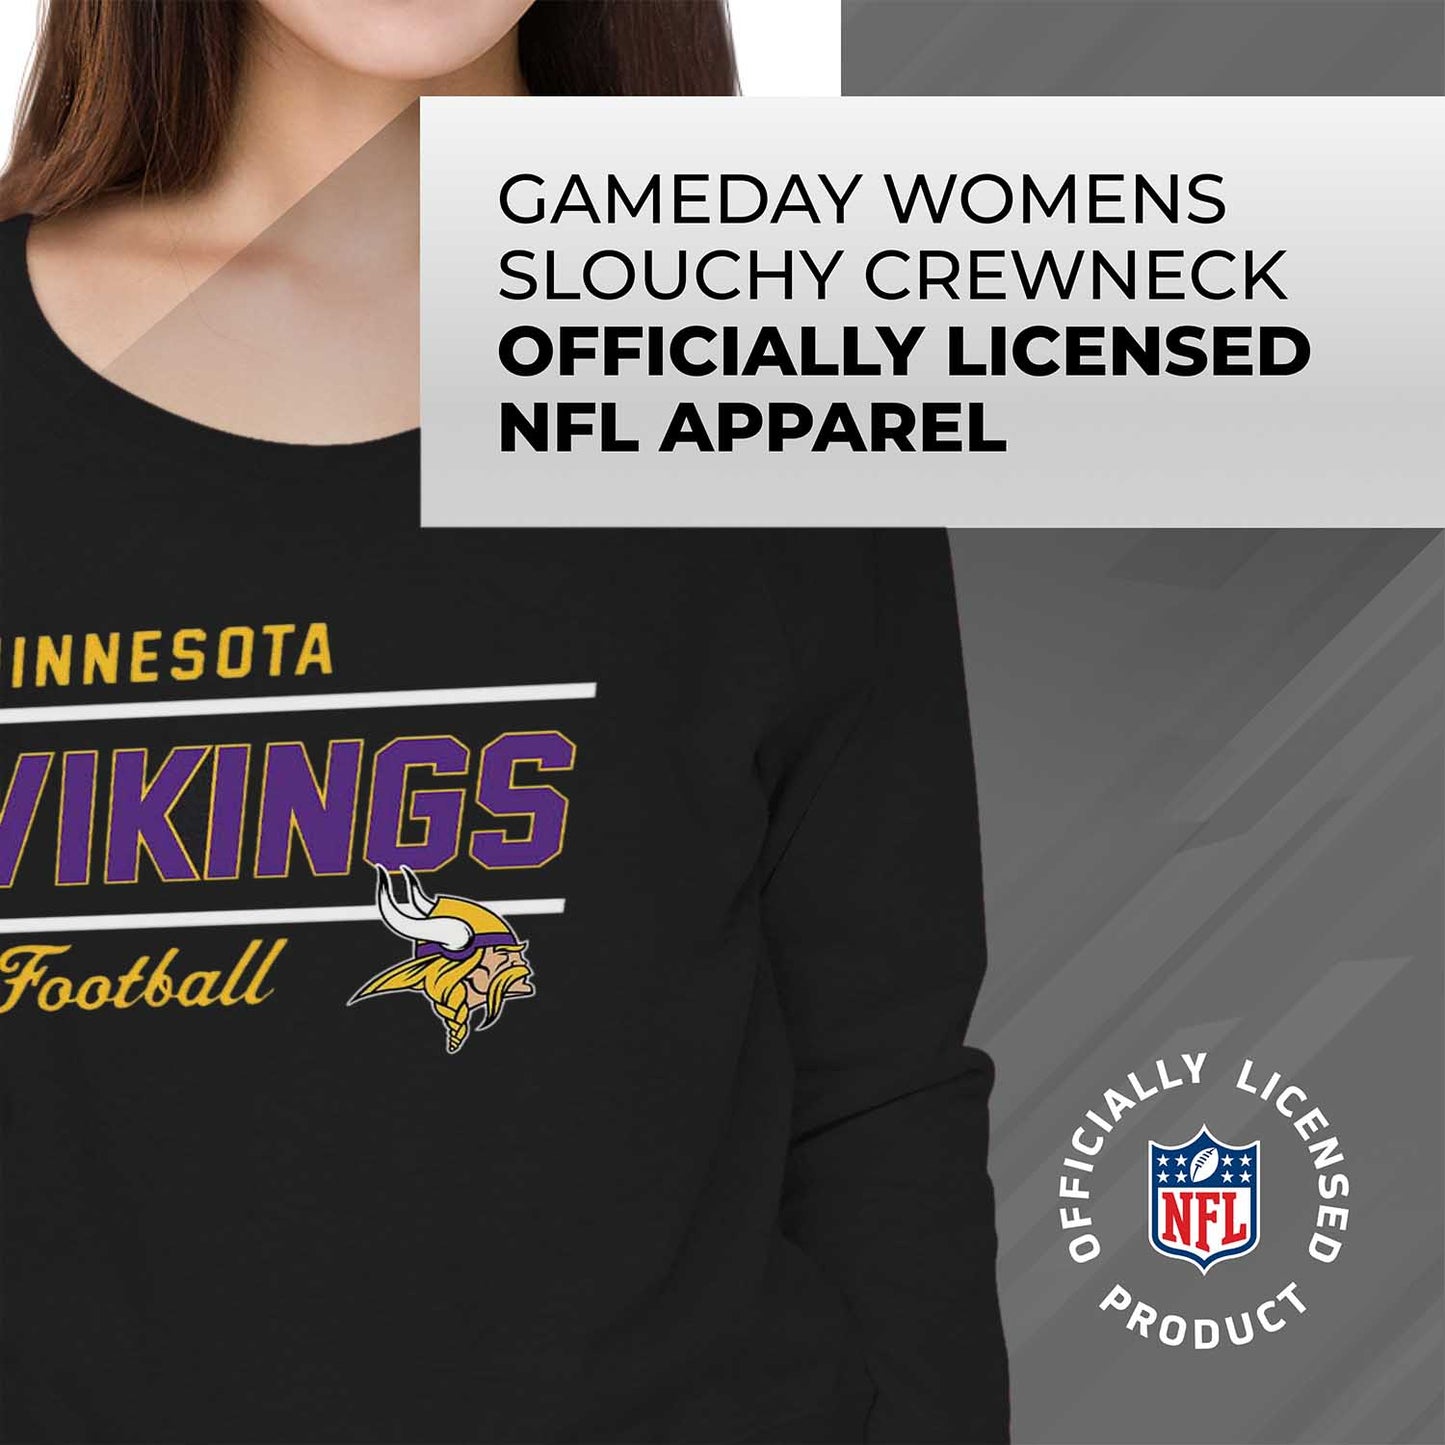 Minnesota Vikings NFL Womens Crew Neck Light Weight - Black